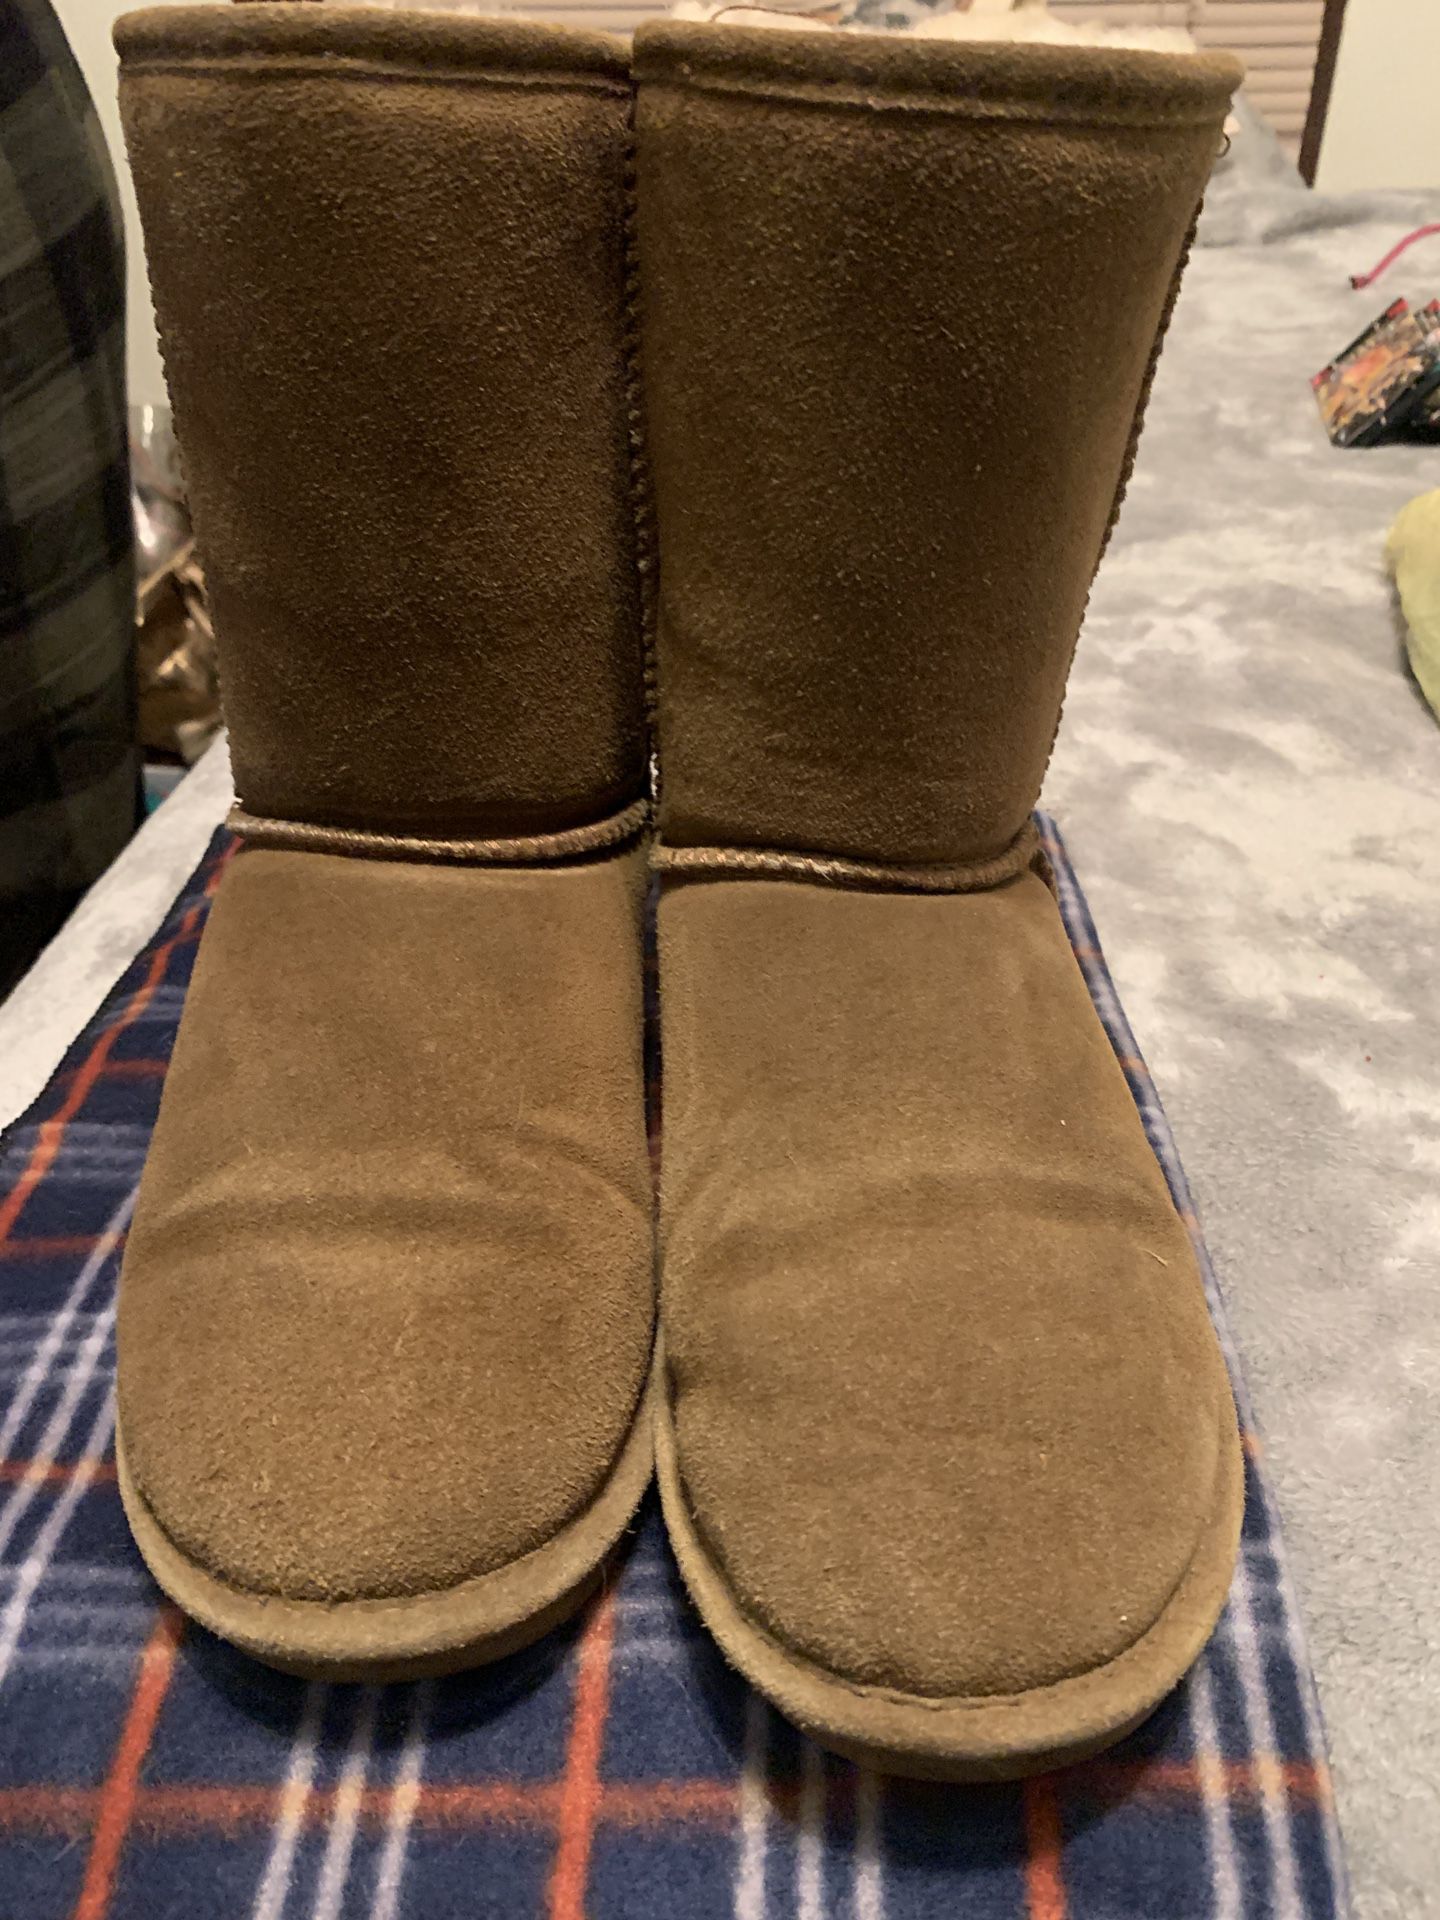 New Women’s Bear Paw Elle Boots Size 8